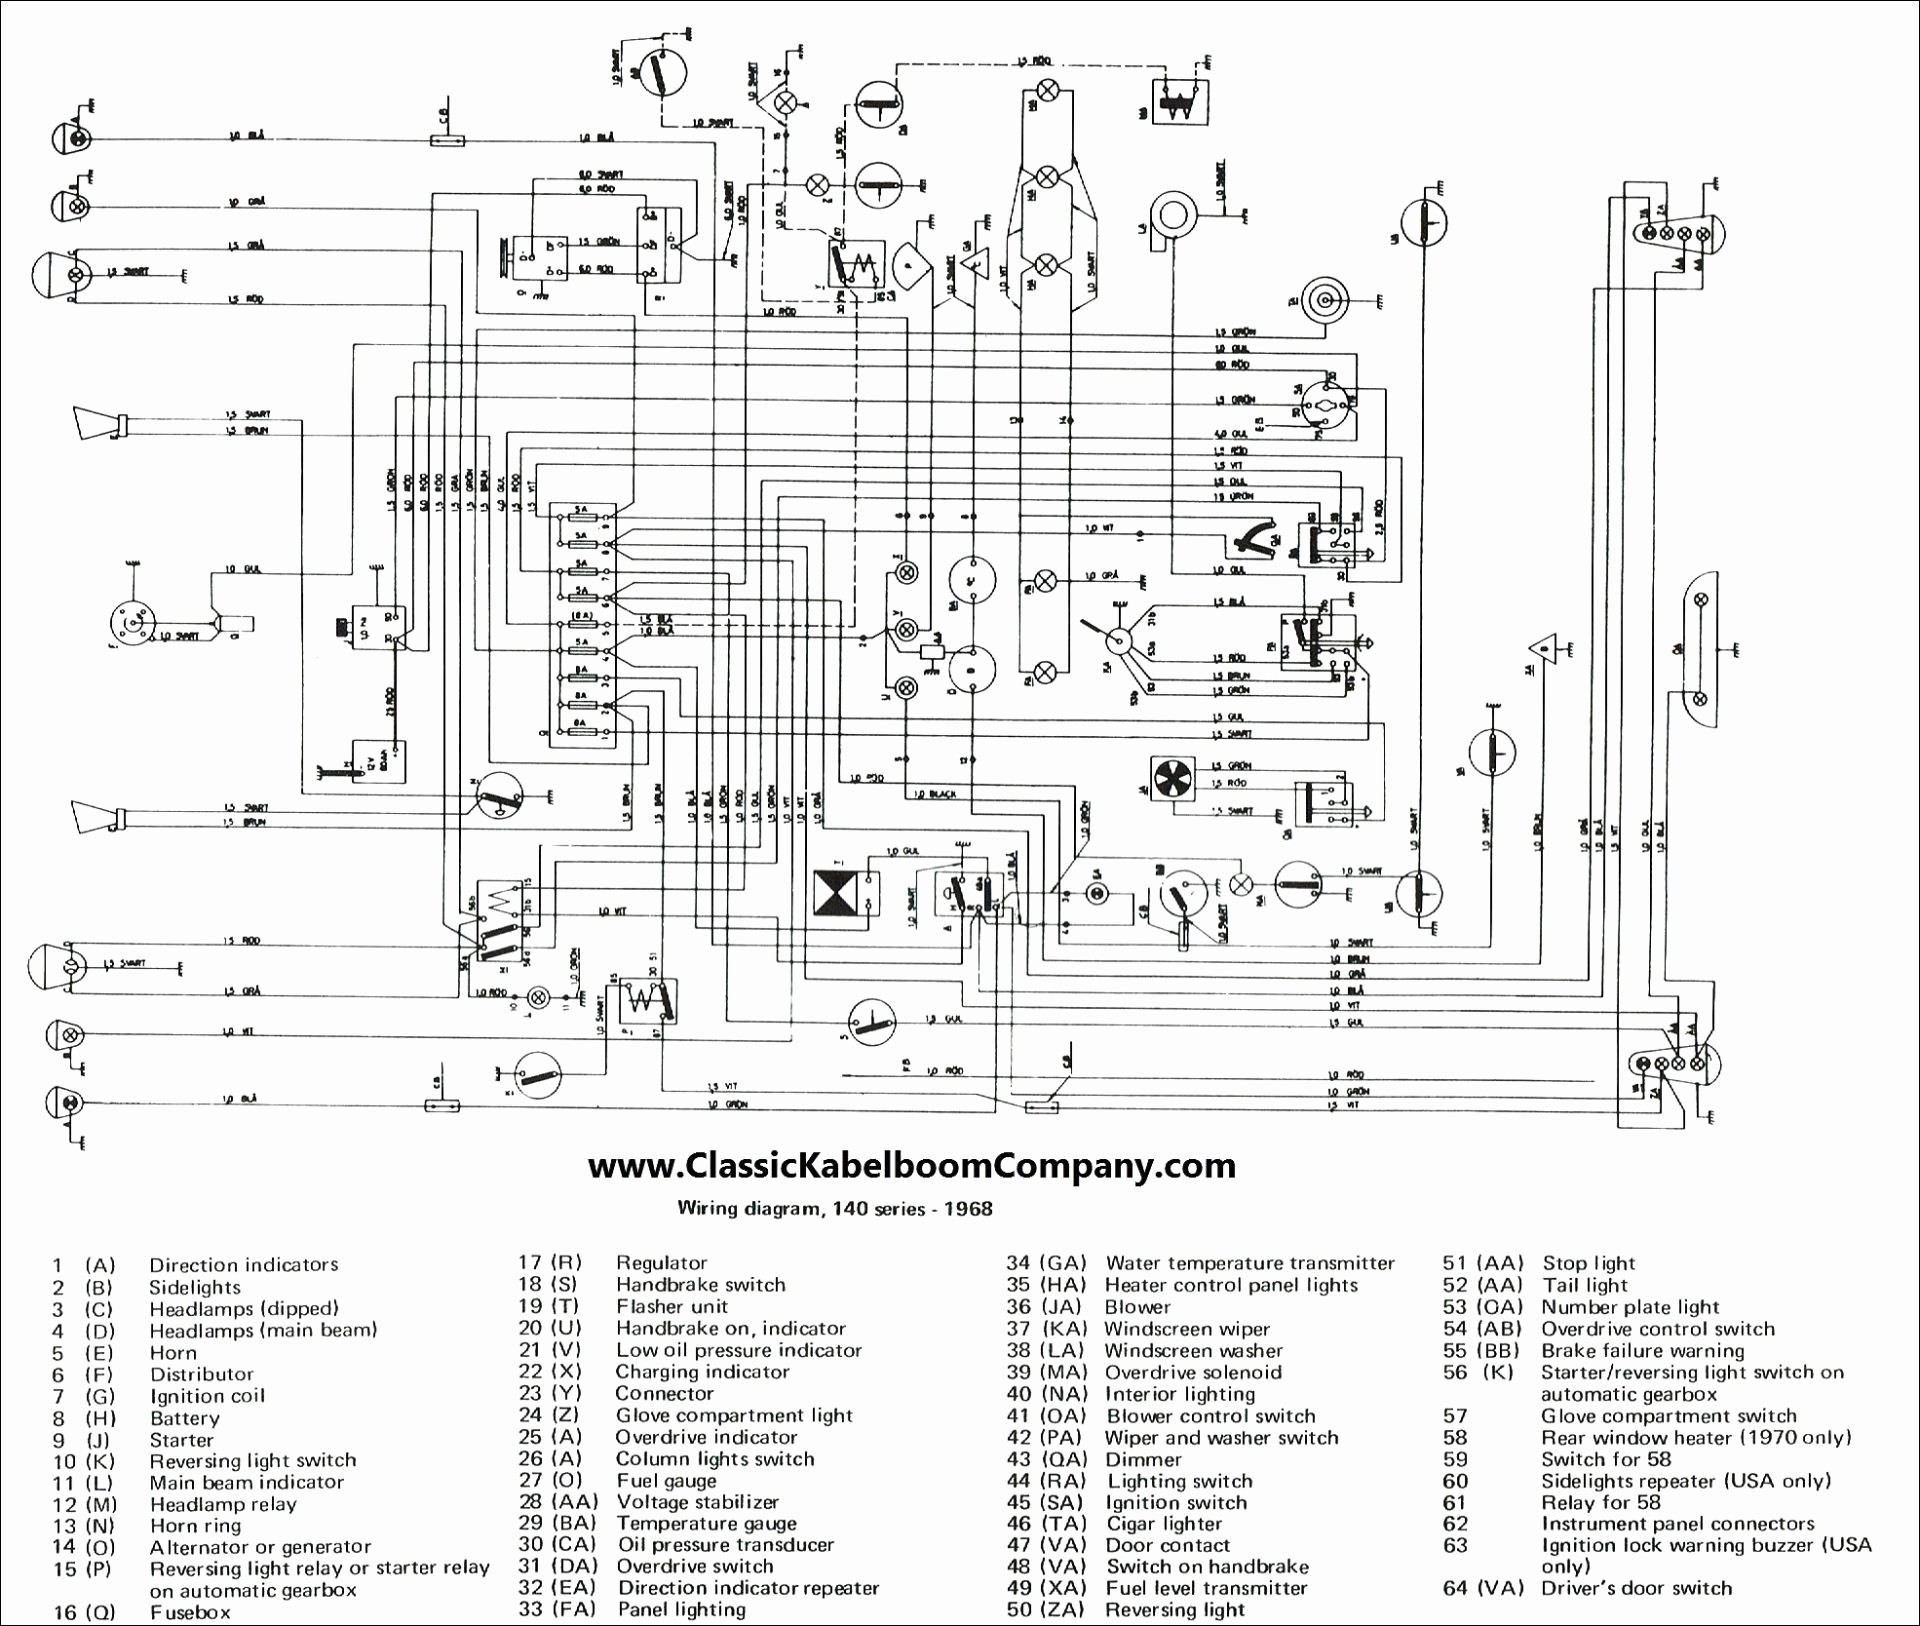 Wiring Diagram Electric Oil Pressure Gauge New Engine Alternator Wiring Diagram New toyota Alternator Wiring